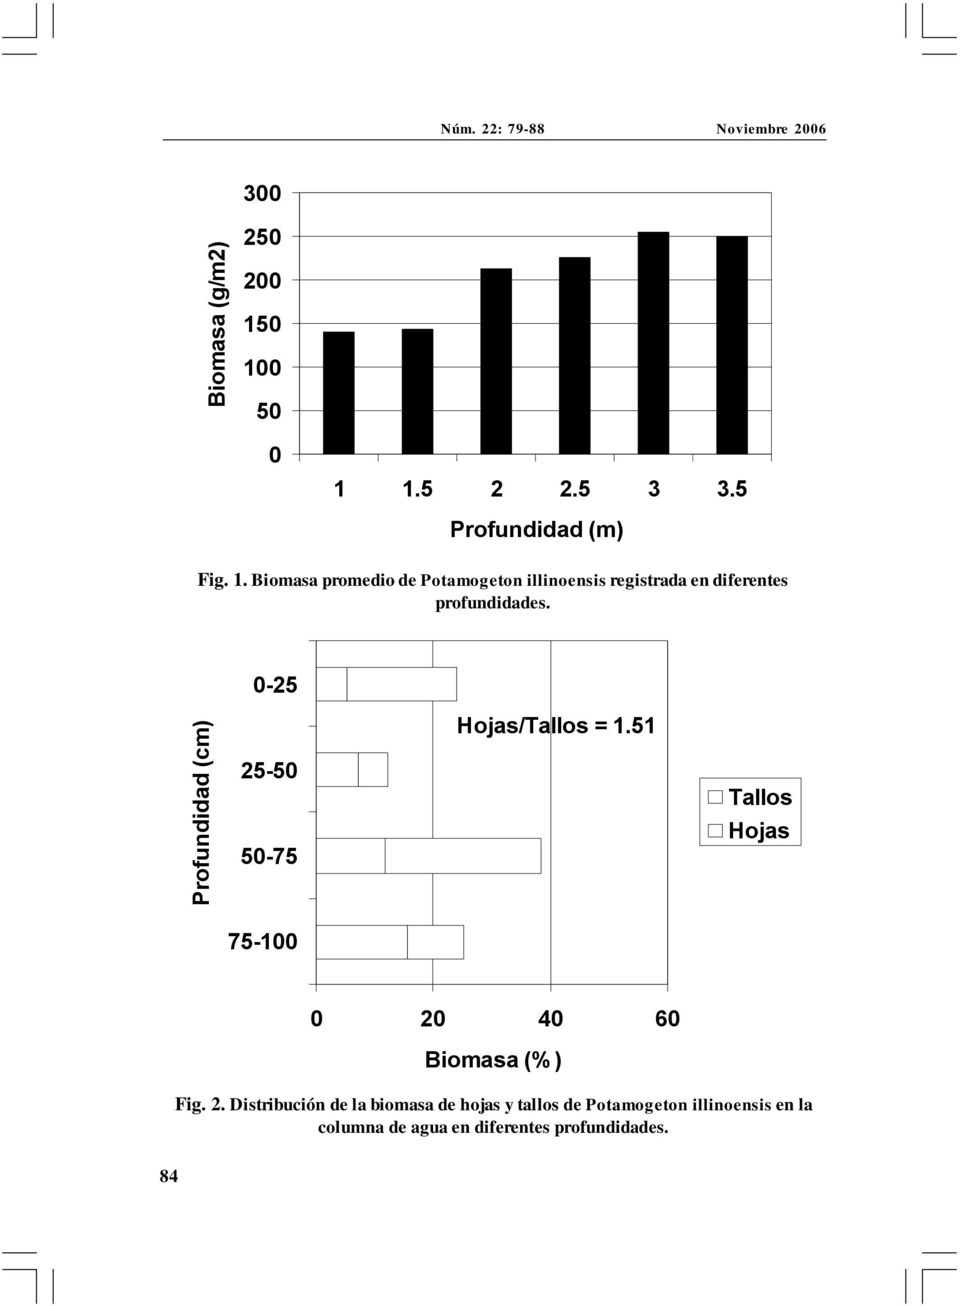 Biomasa promedio de Potamogeton illinoensis registrada en diferentes profundidades.